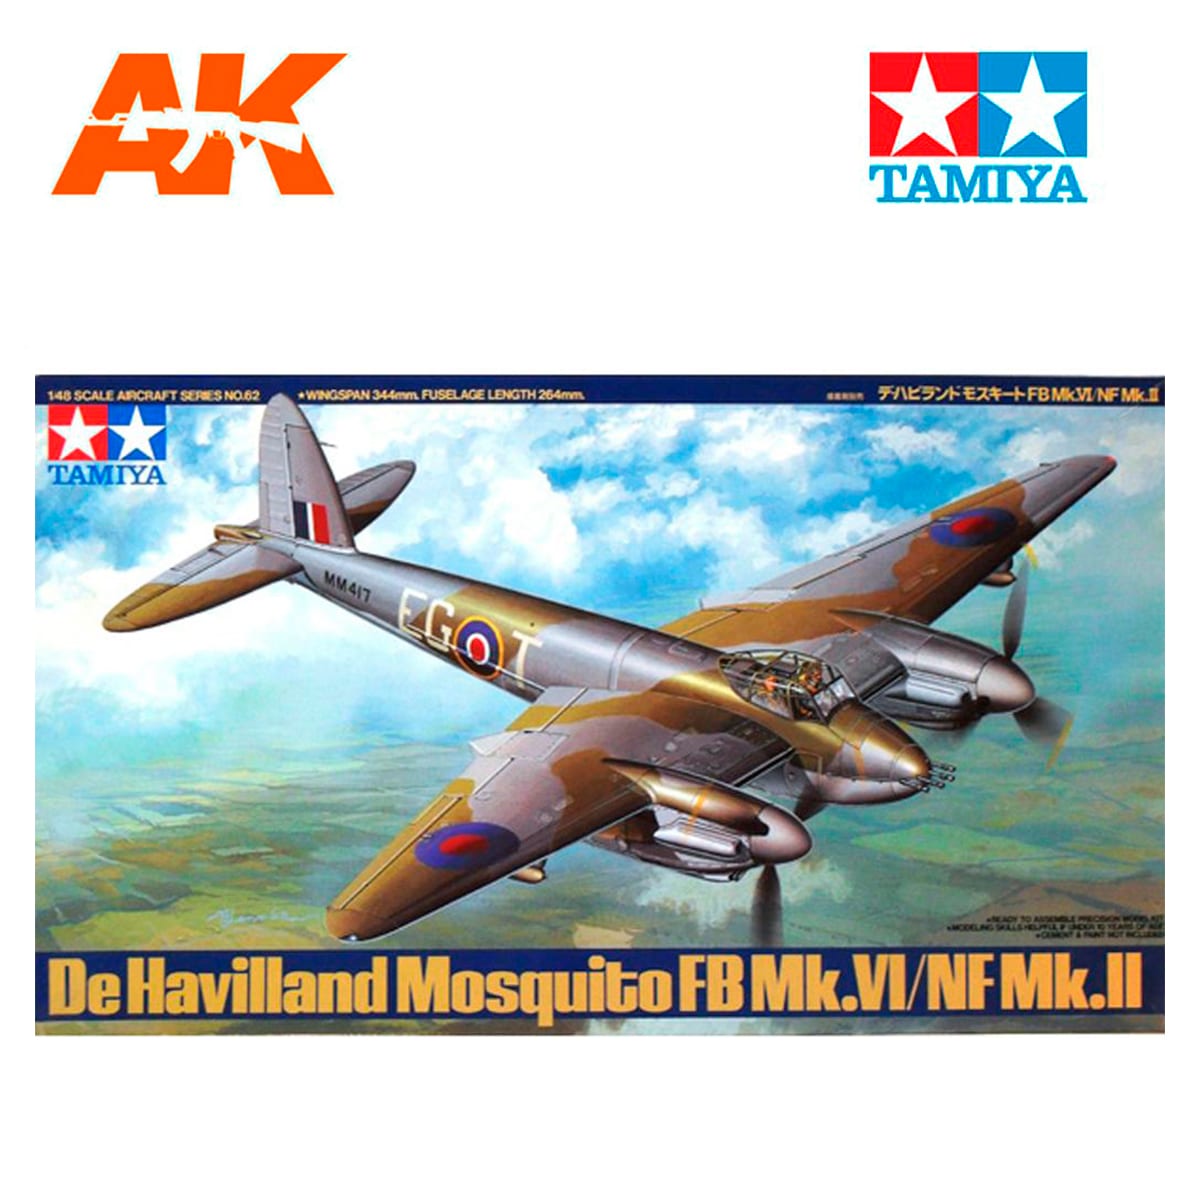 1/48 Mosquito FB Mk.VI/NF Mk.II